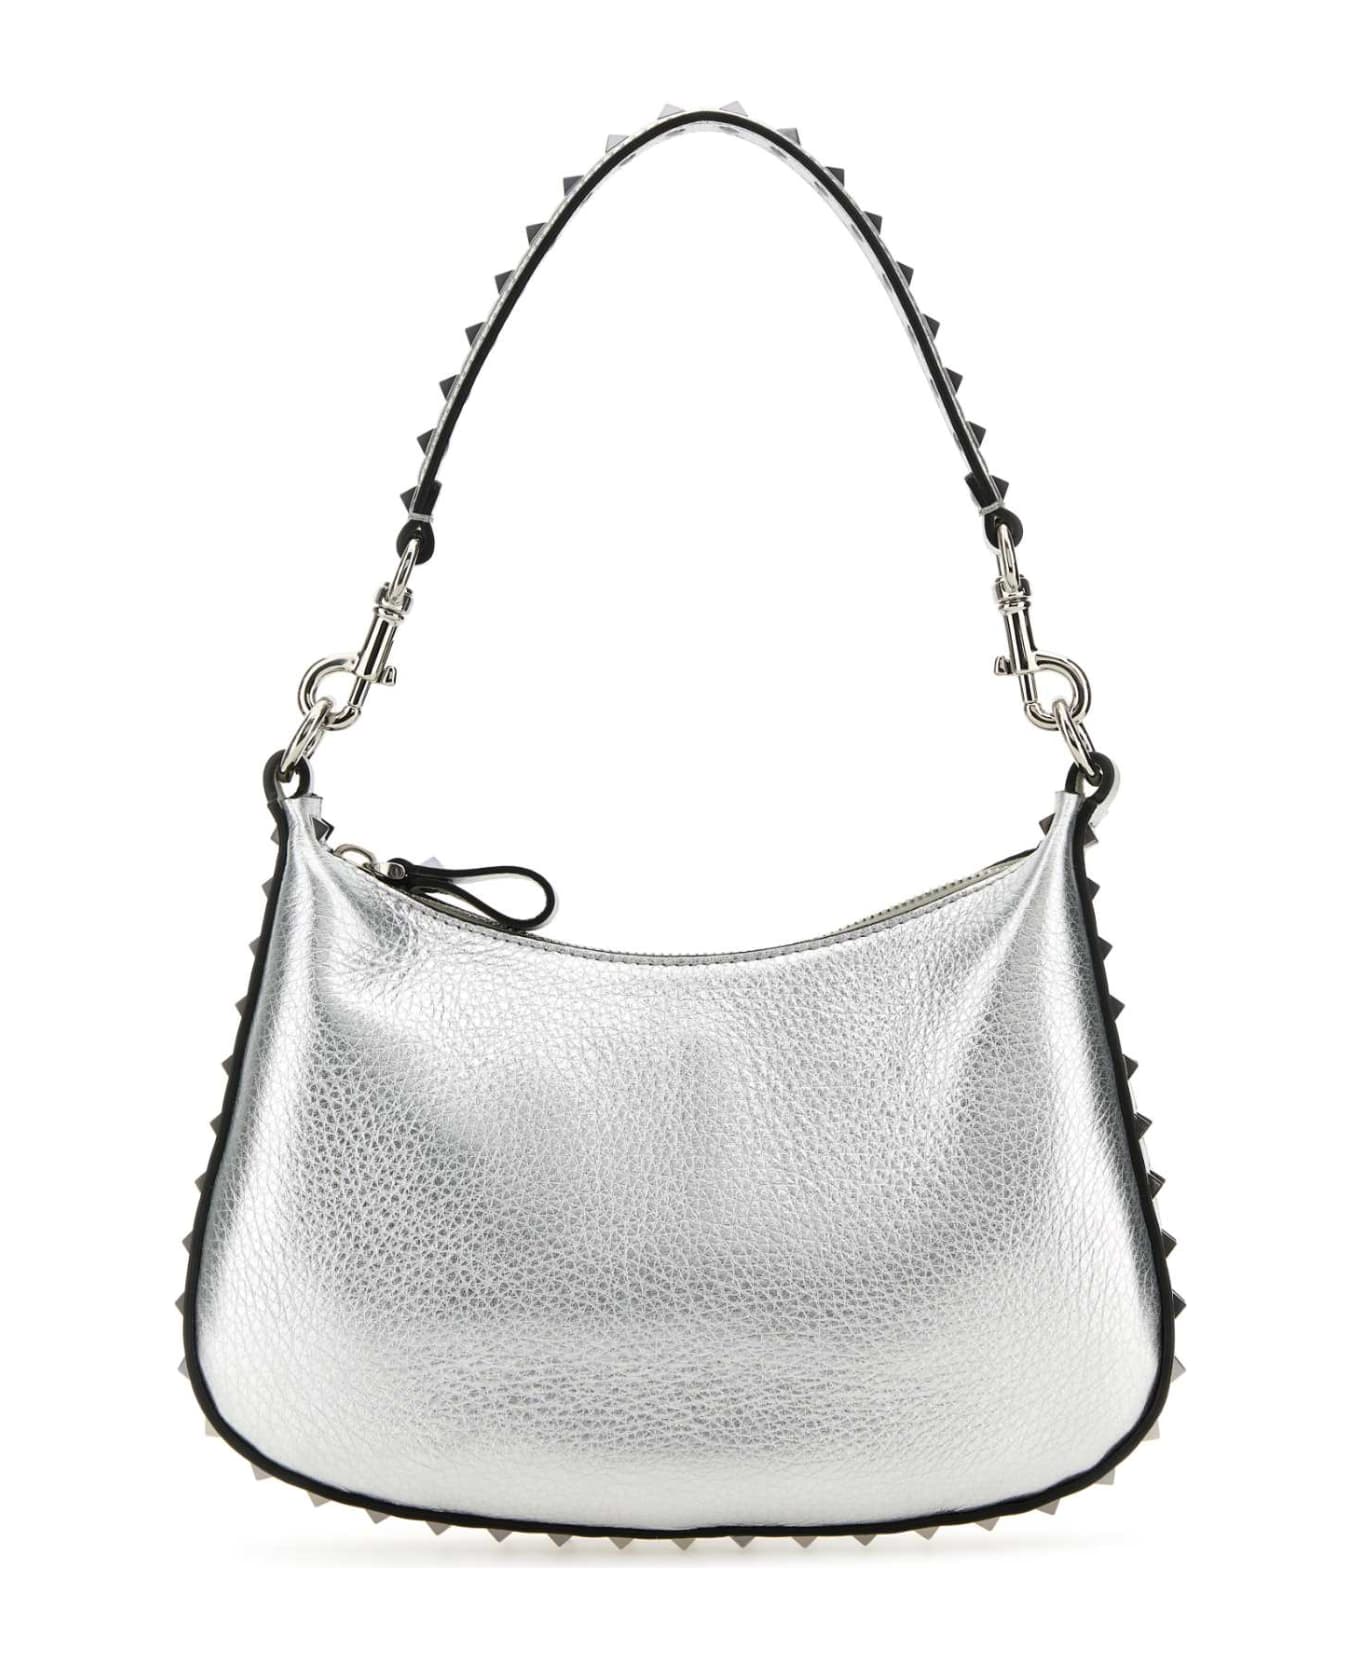 Valentino Garavani Silver Leather Rockstud Handbag - SILVER トートバッグ